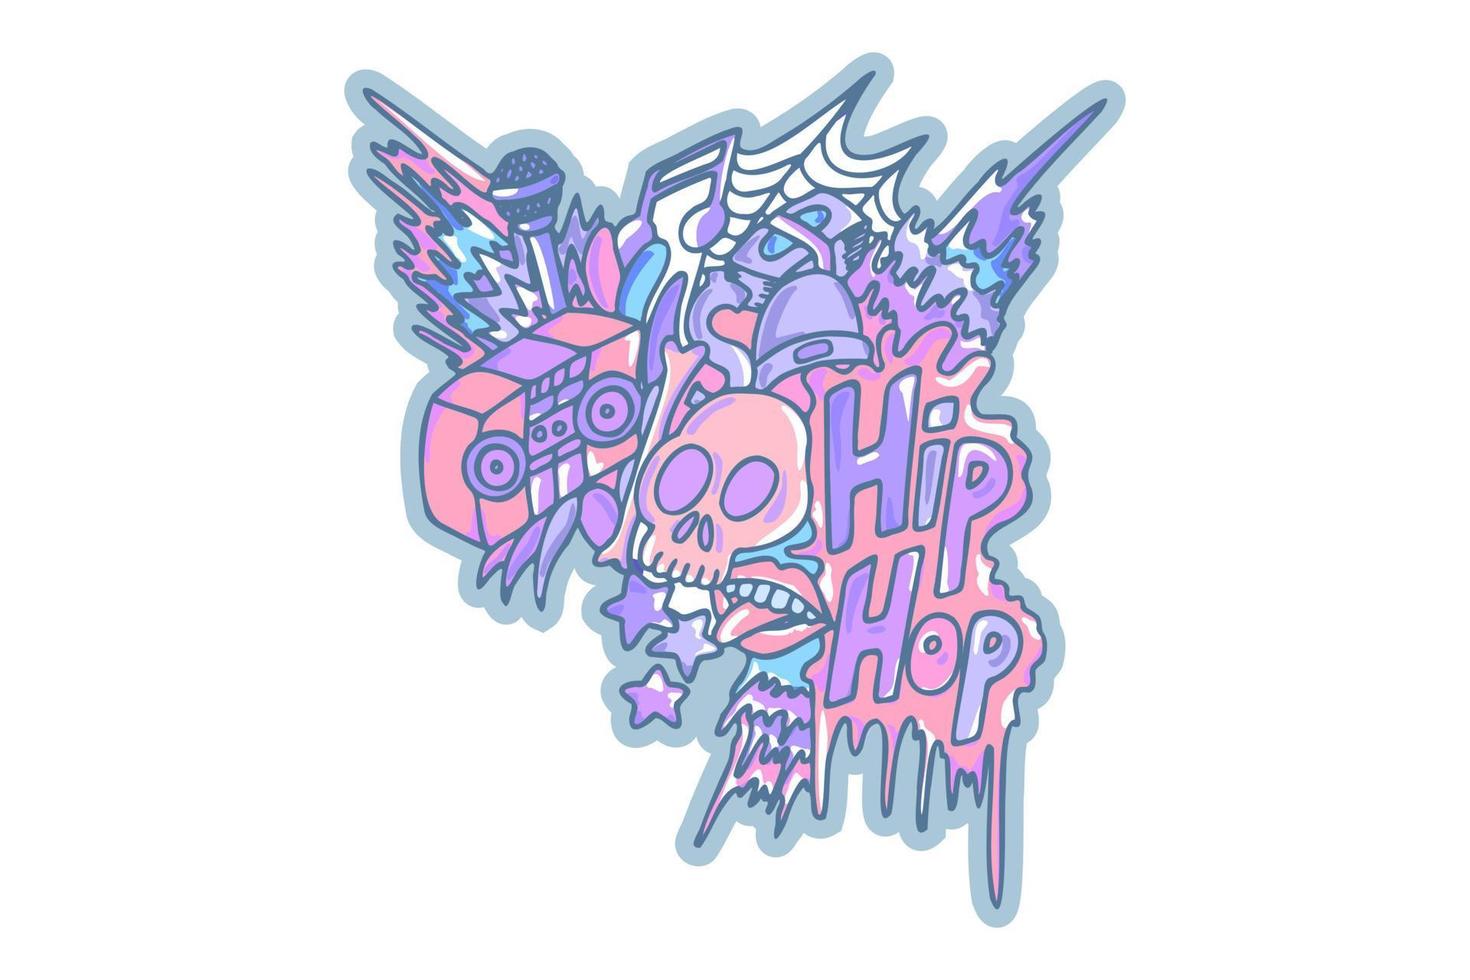 arte del doodle de la etiqueta engomada del hip hop vector